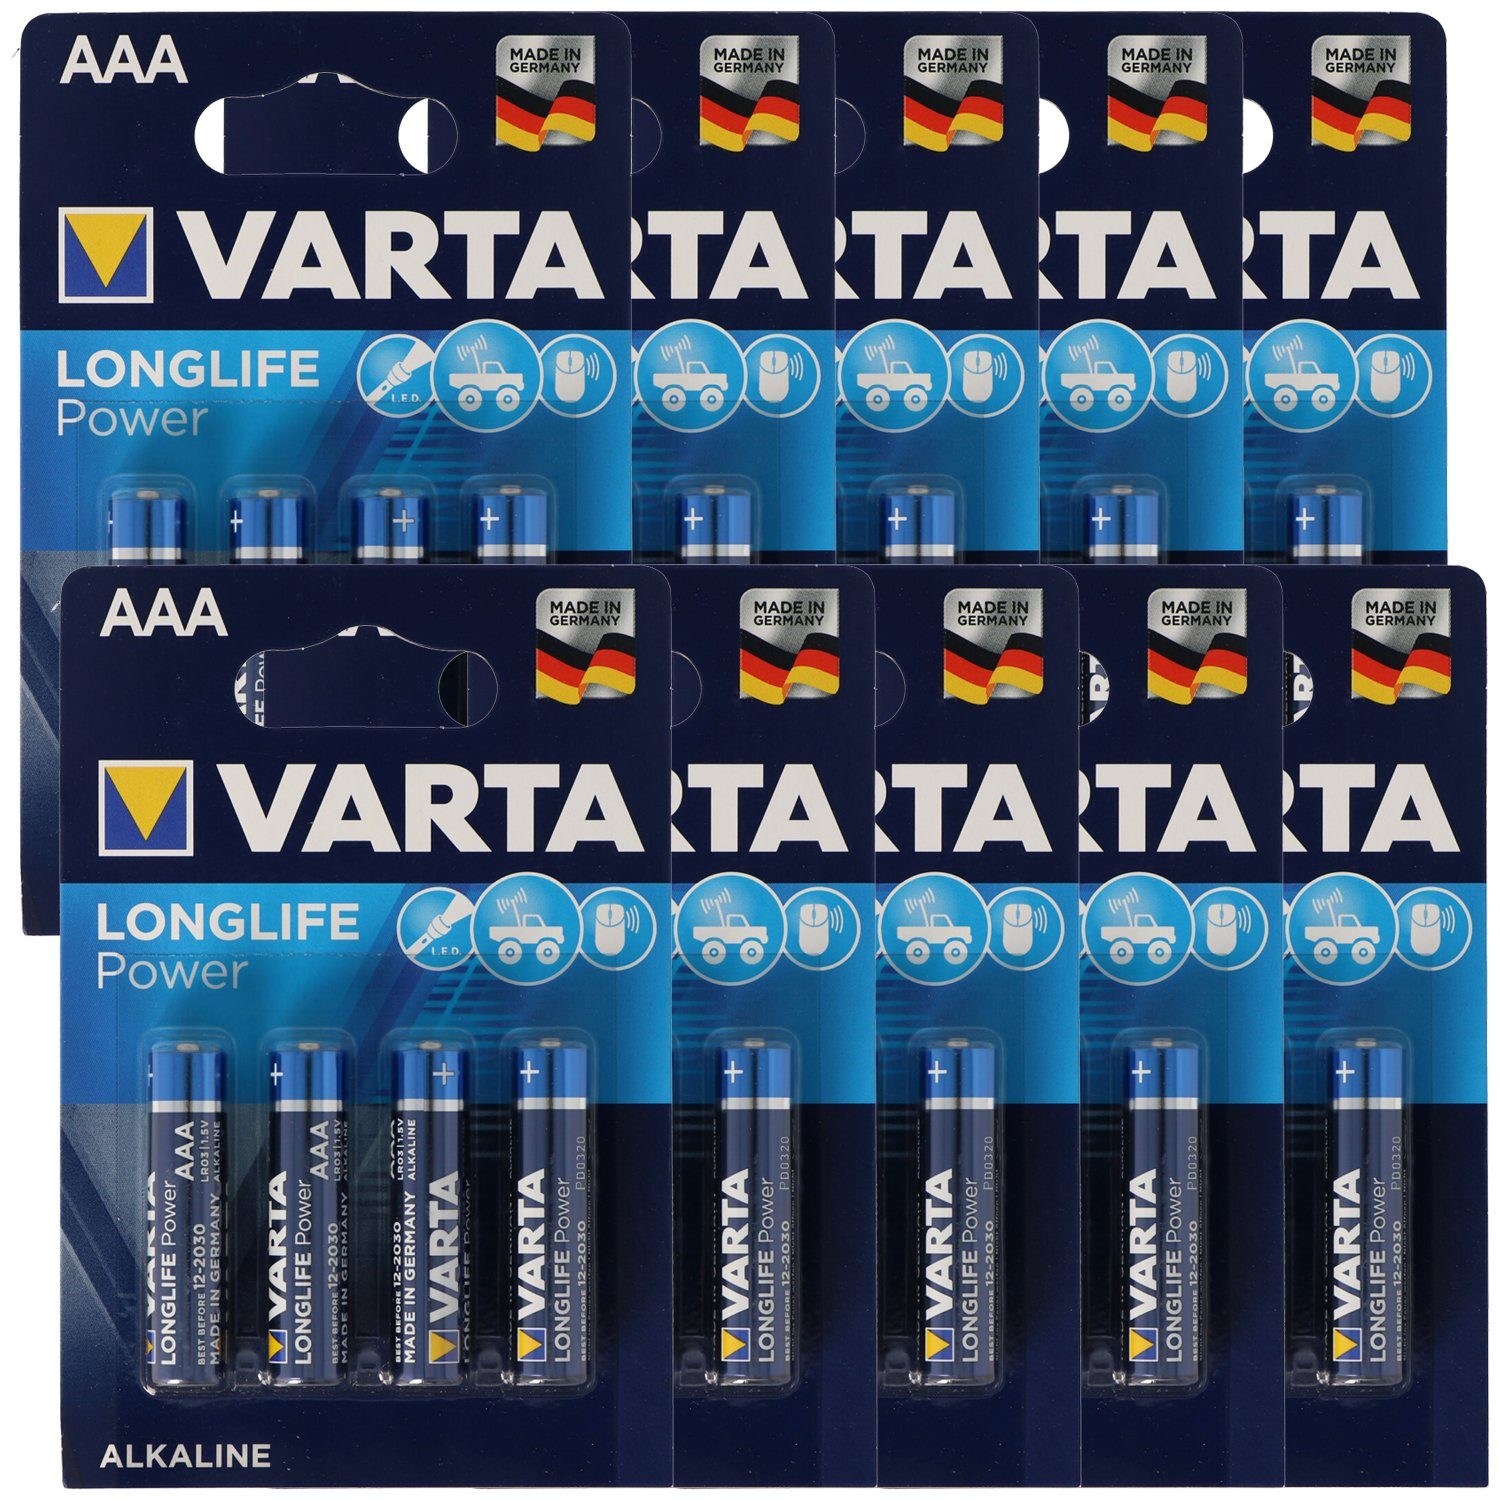 VARTA Varta Longlife Power (ehem. High Energy) Micro AAA Batterien 4903 10x Batterie, (1,5 V)